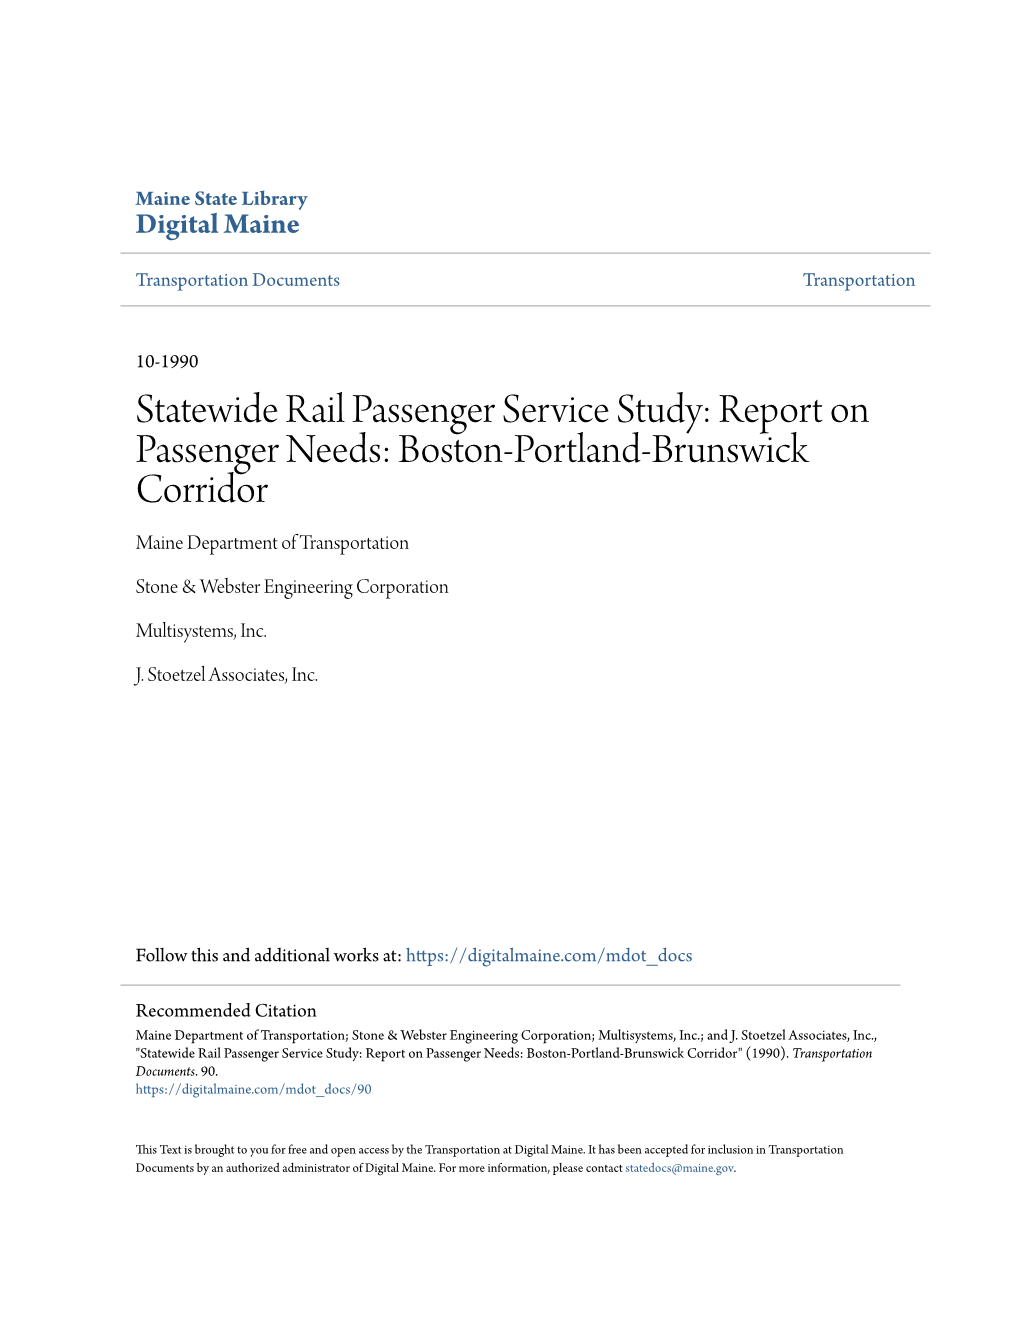 Statewide Rail Passenger Service Study: Report on Passenger Needs: Boston-Portland-Brunswick Corridor Maine Department of Transportation